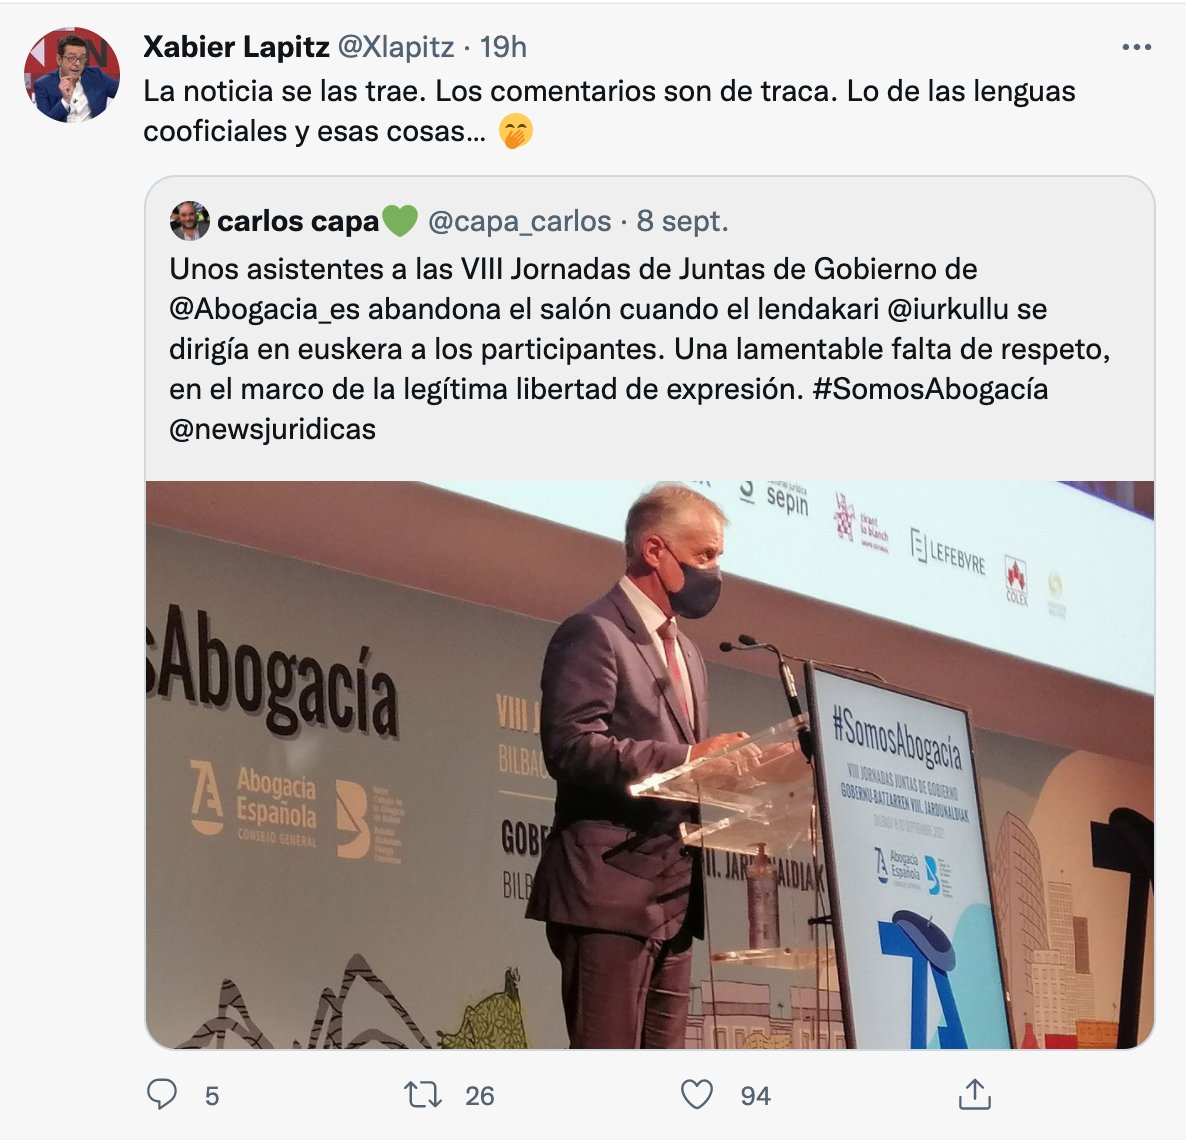 tuit Xabier Lapitz atacas a euskera